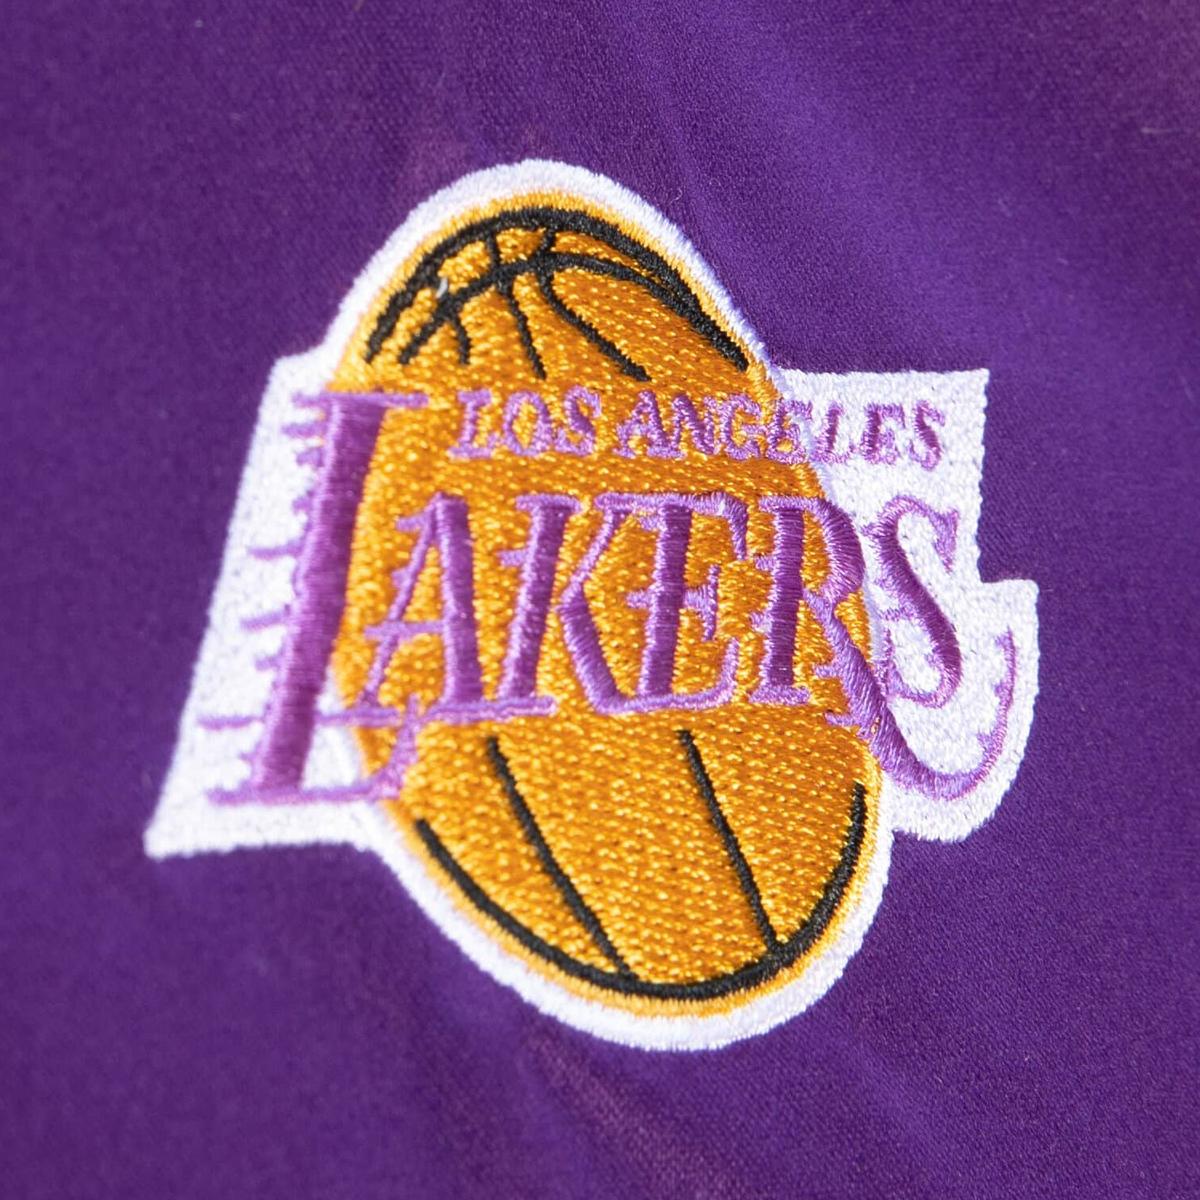 Mitchell & Ness CNY 4.0 Shooting shirt LA Lakers dark purple